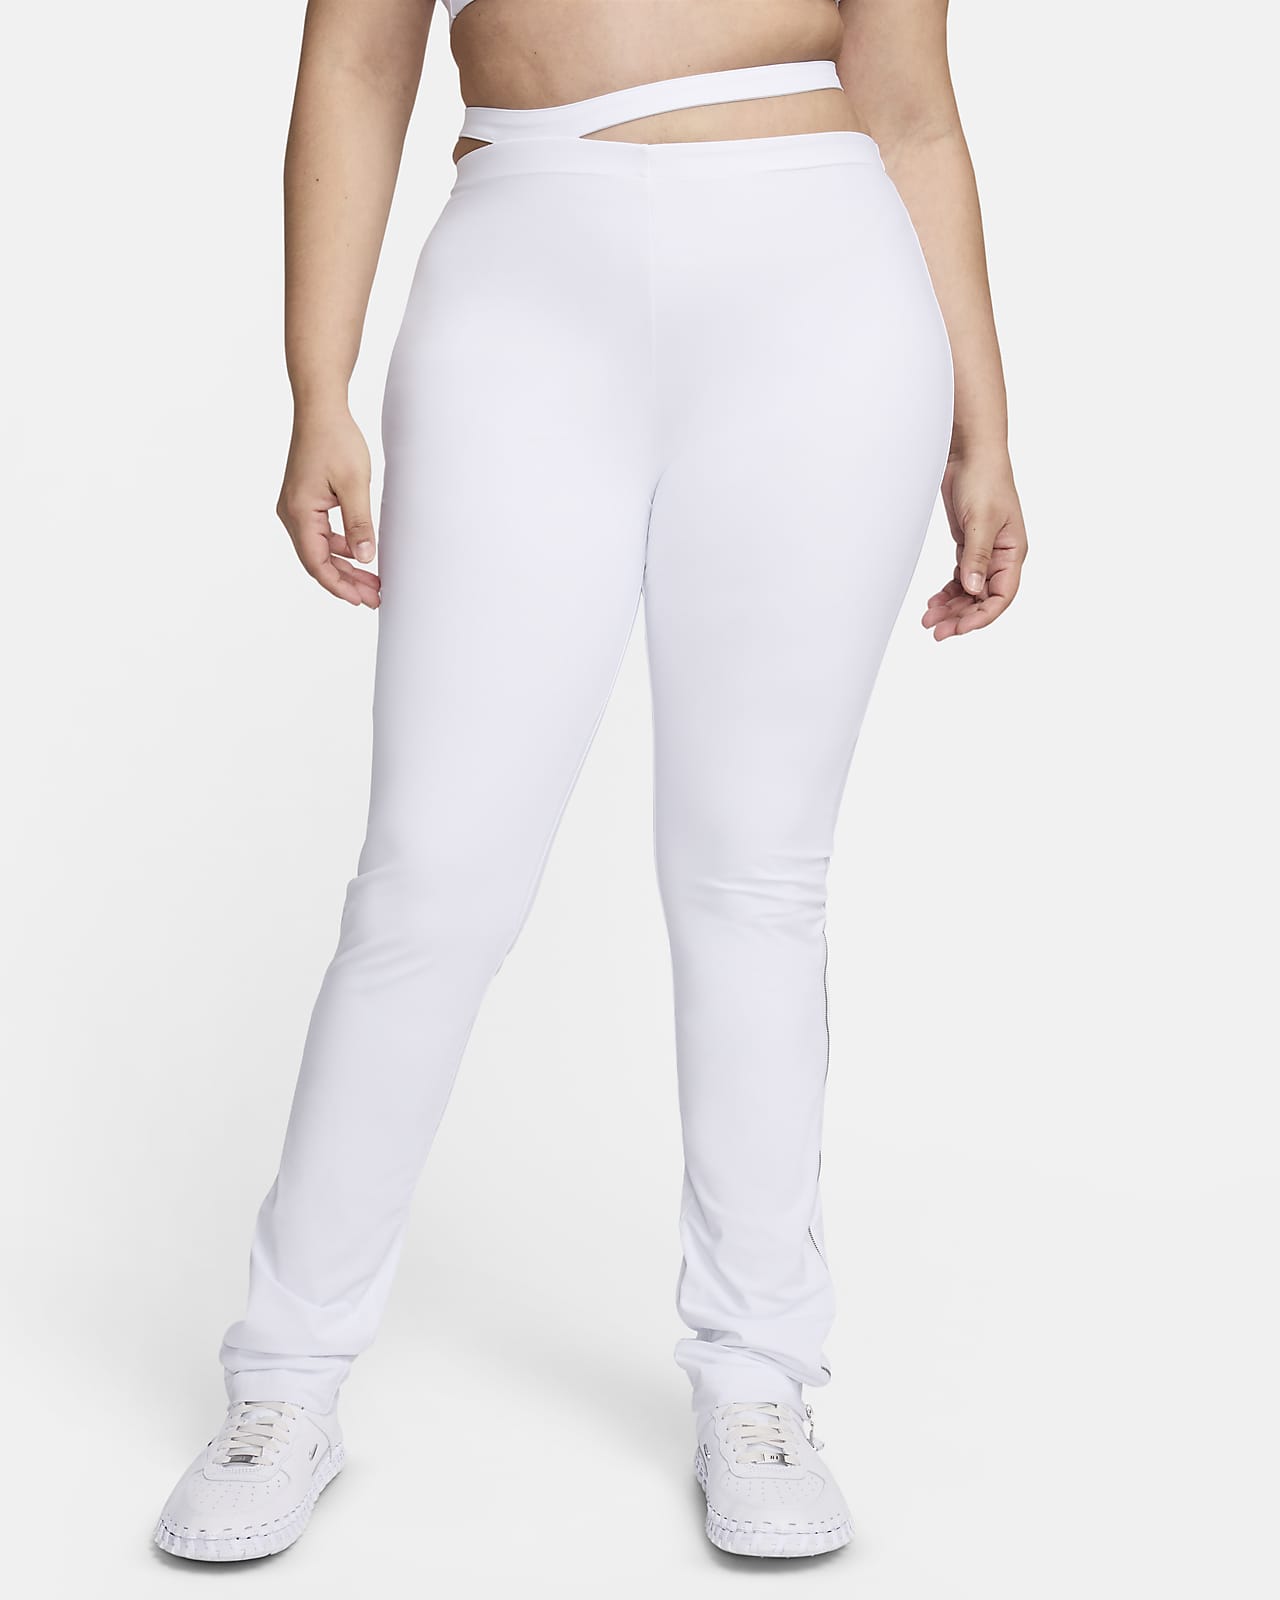 Nike x Jacquemus Women's Pants